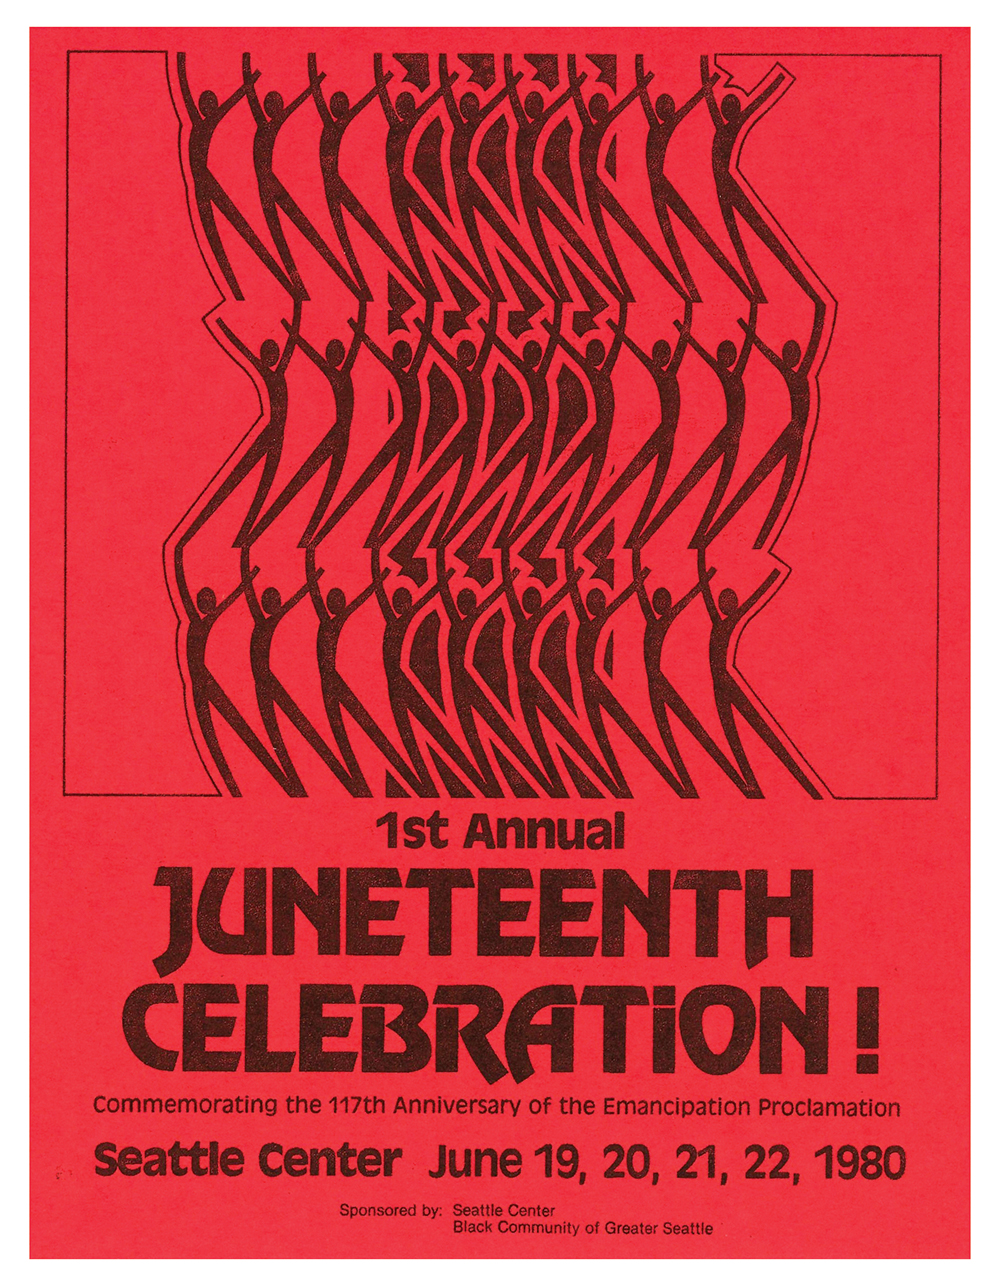 Cover of program for Juneteenth celebration at Seattle Center_1980